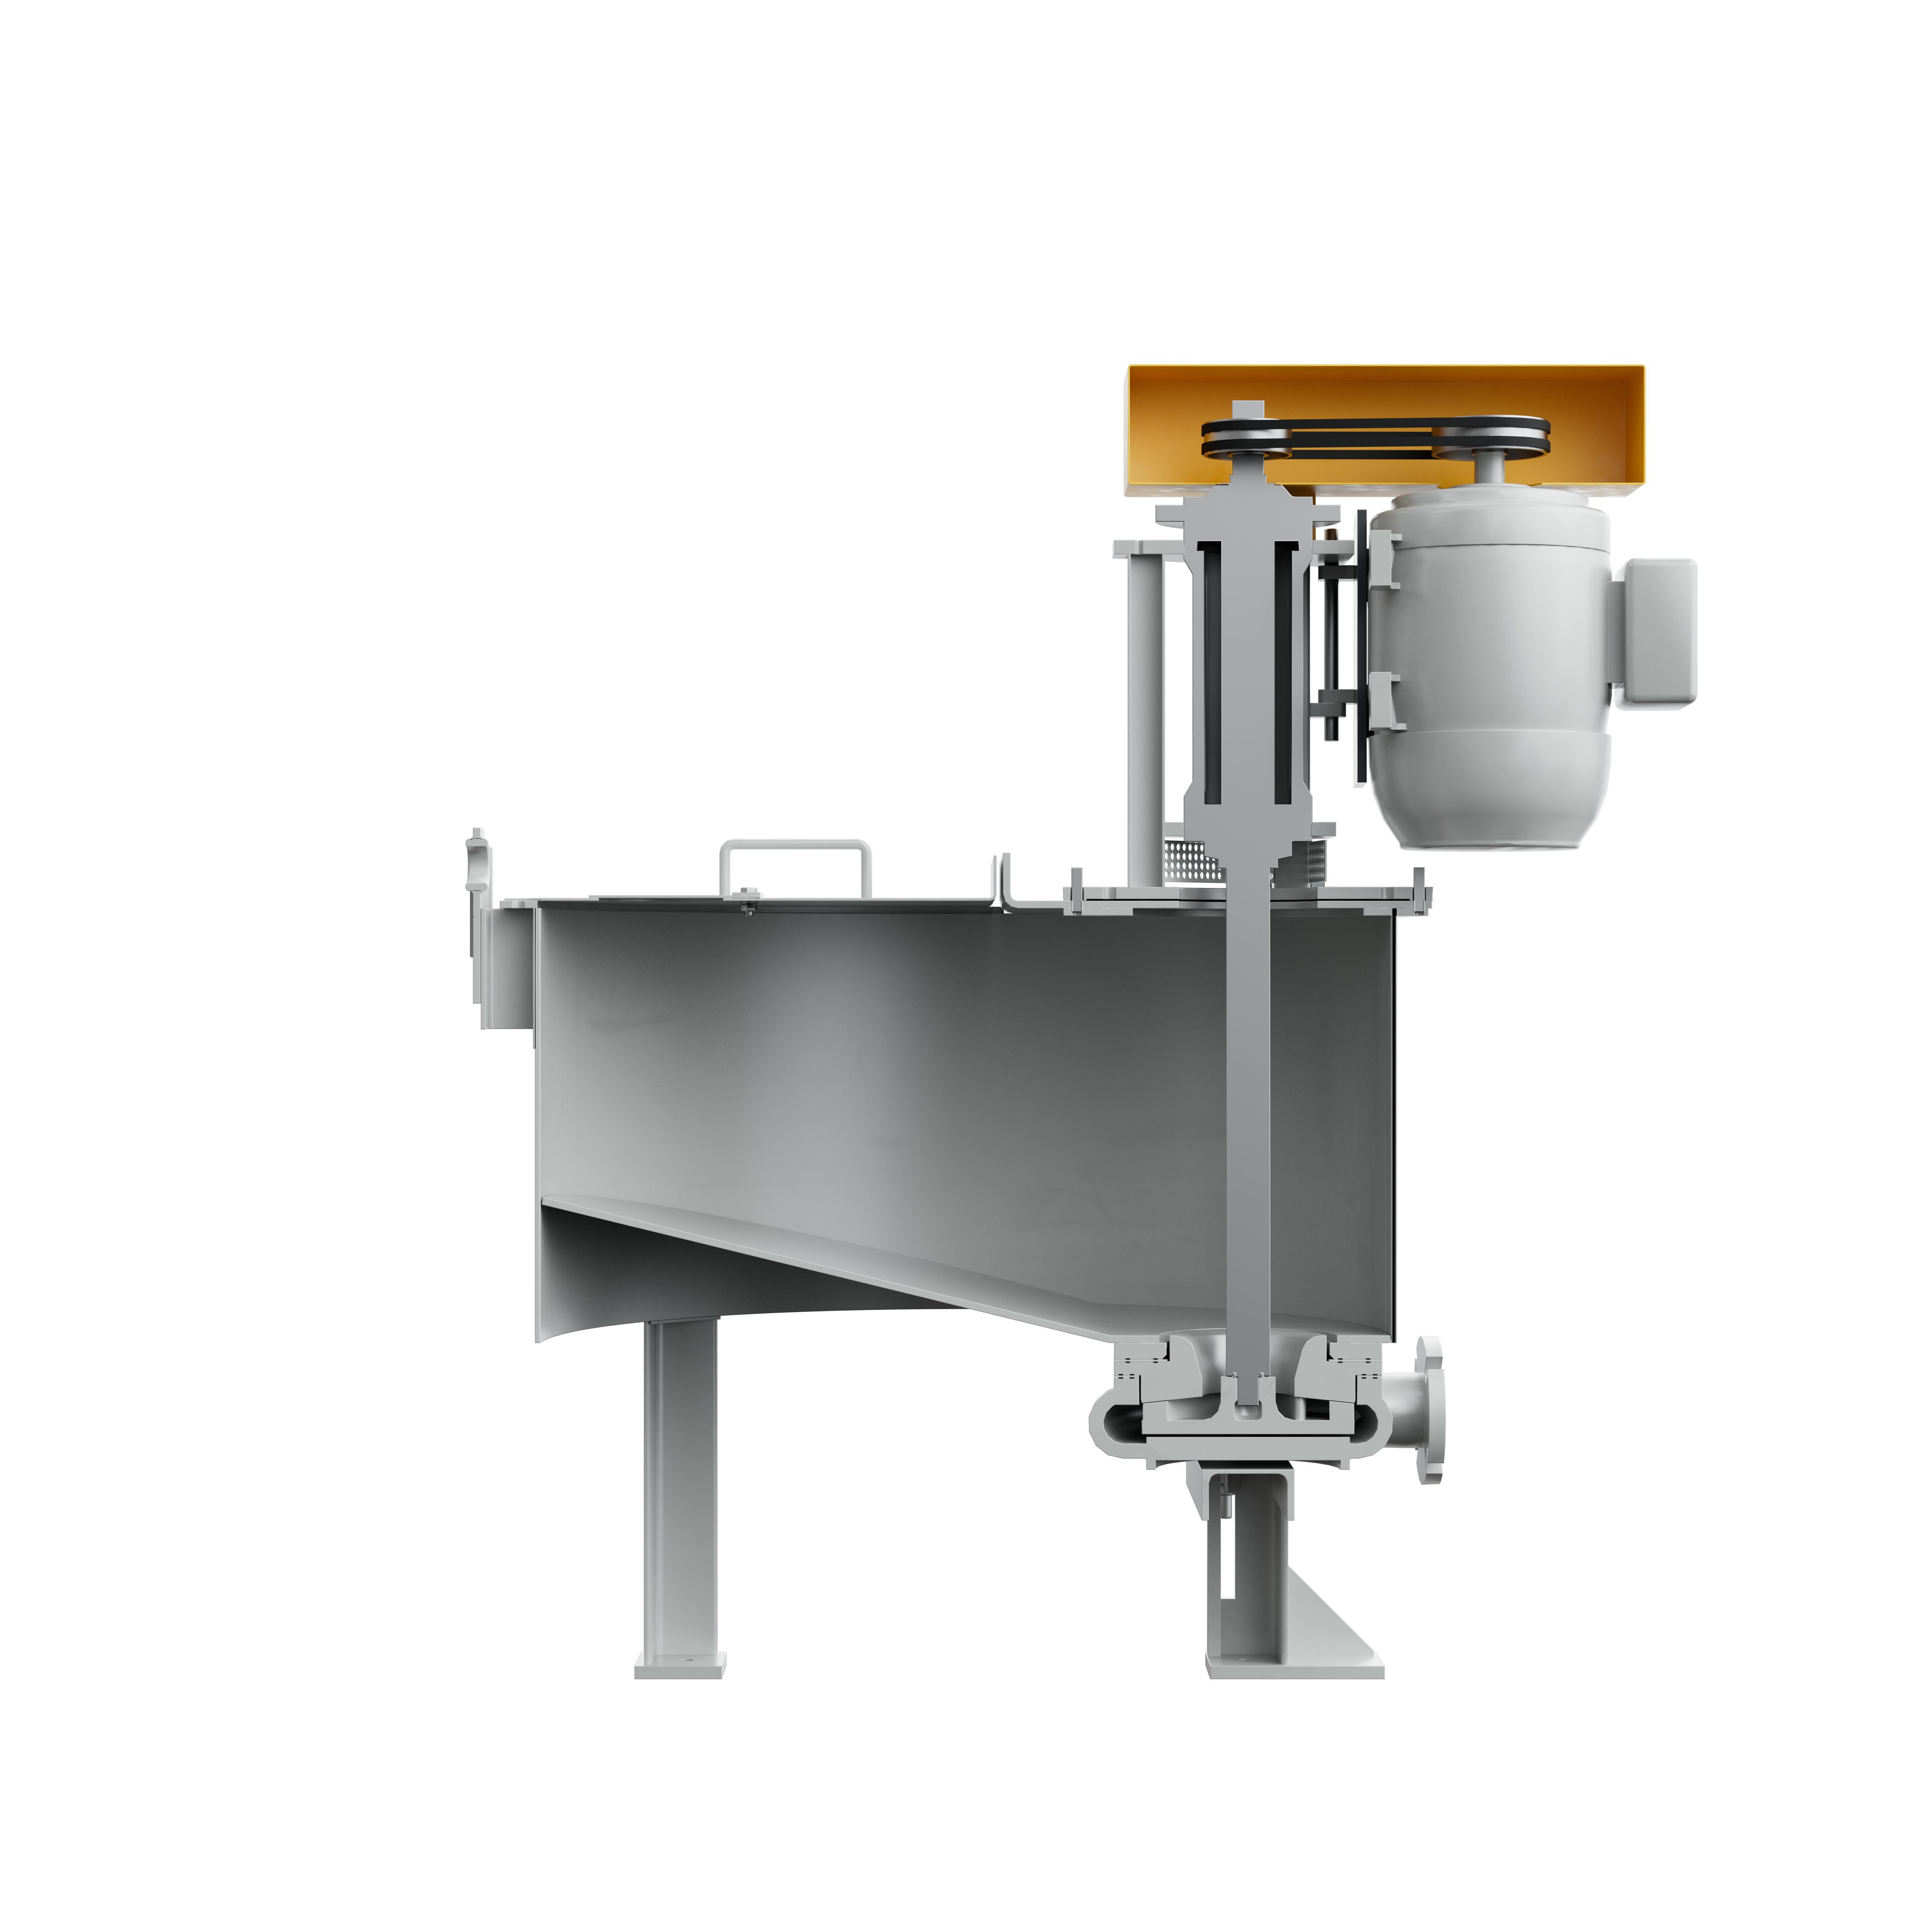 Sala VT tank pump design features